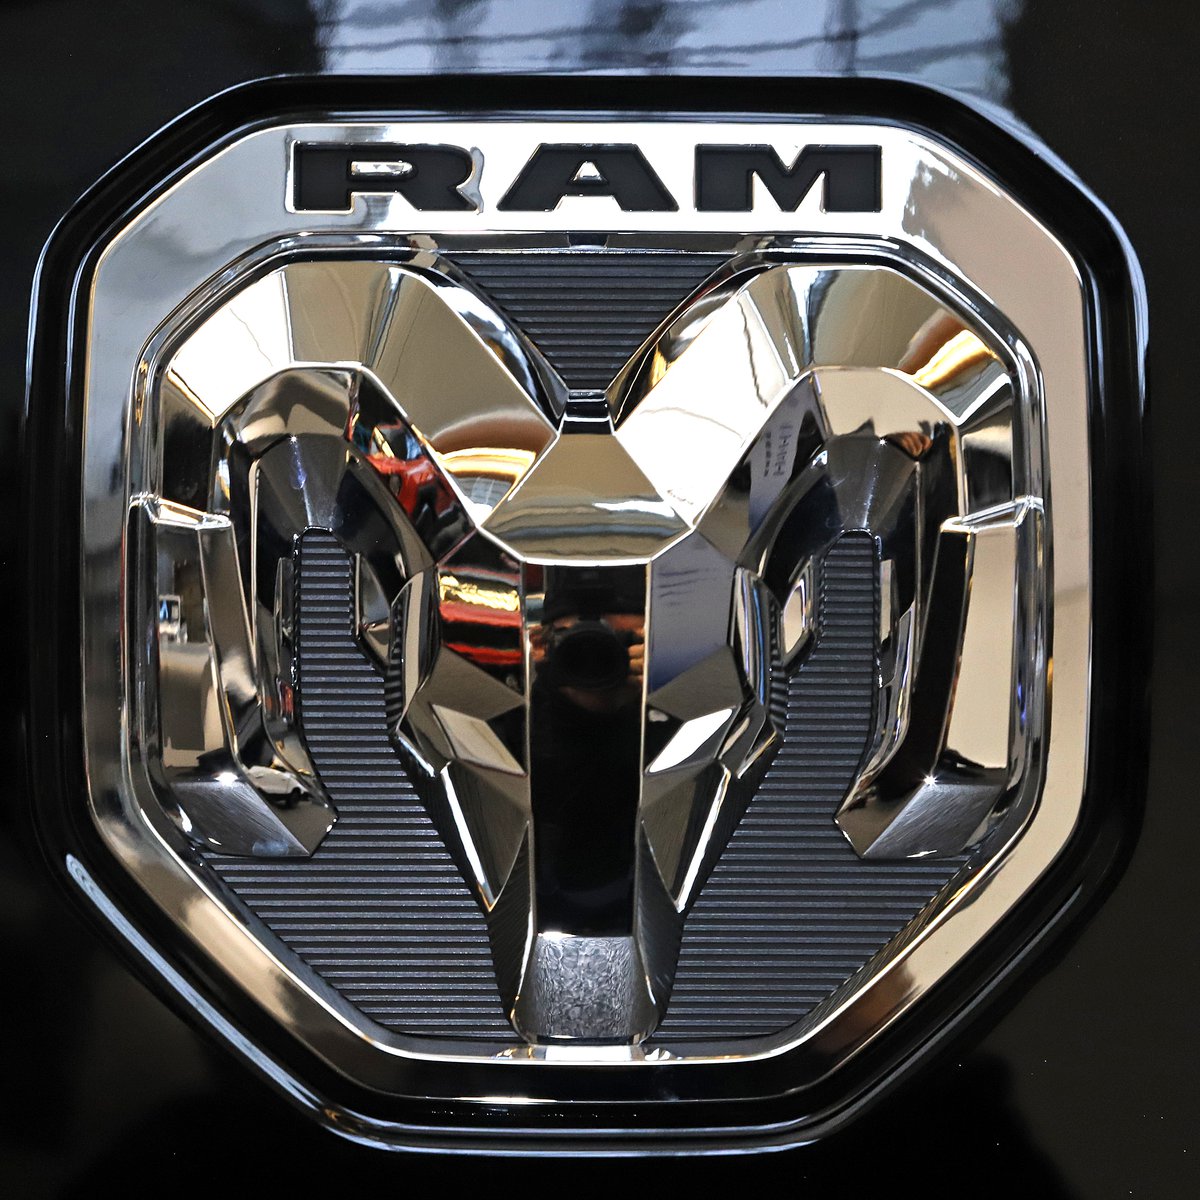 Ram recalls 1.4 million trucks; tailgates can open unexpectedly